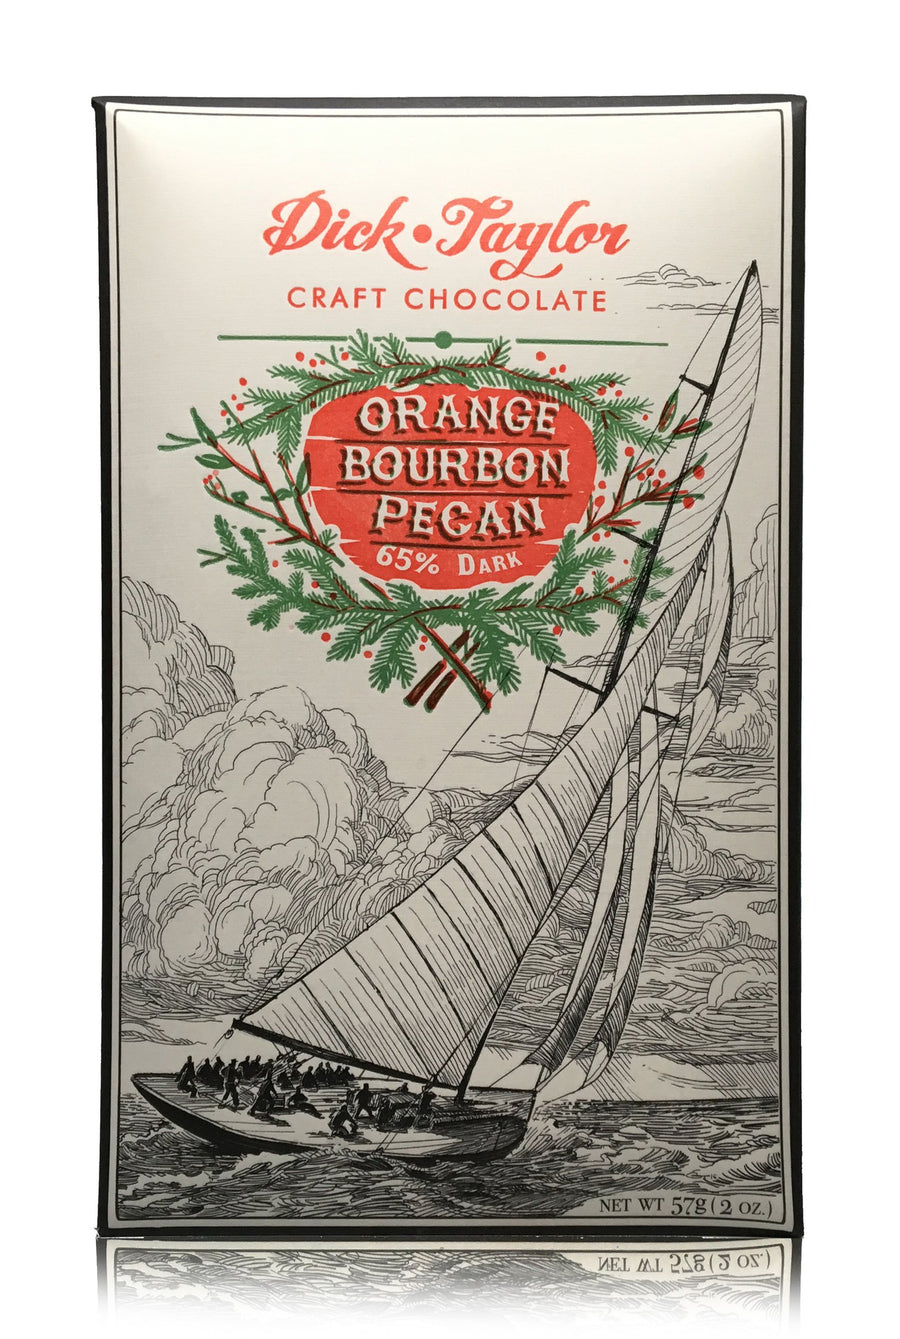 Dick Taylor 65% Dark Chocolate with Bourbon, Orange and Pecan